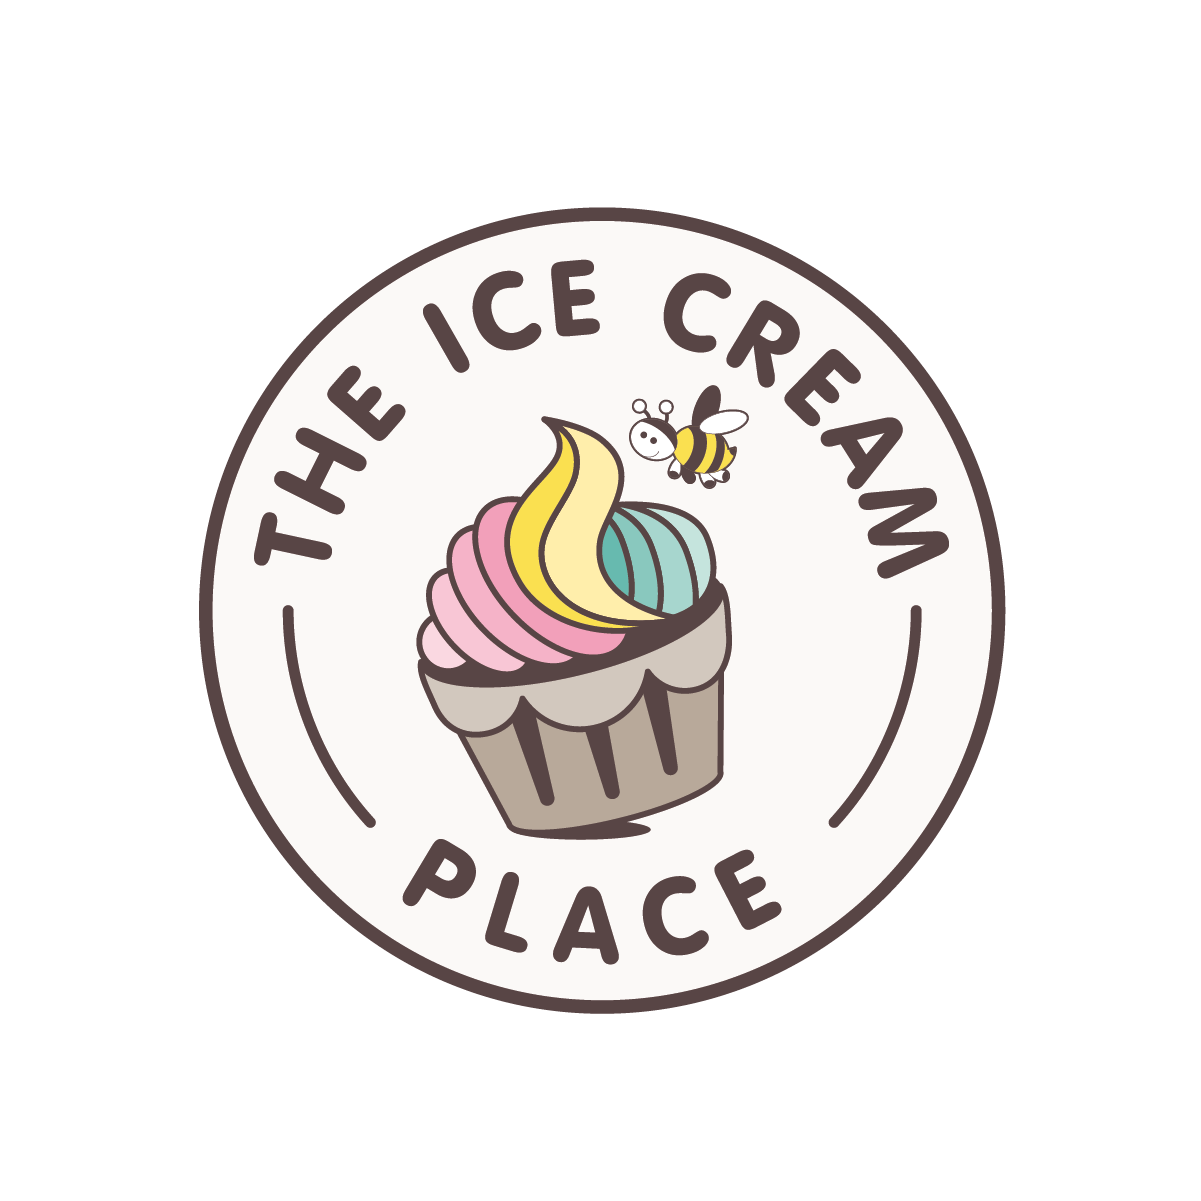 The Ice cream place